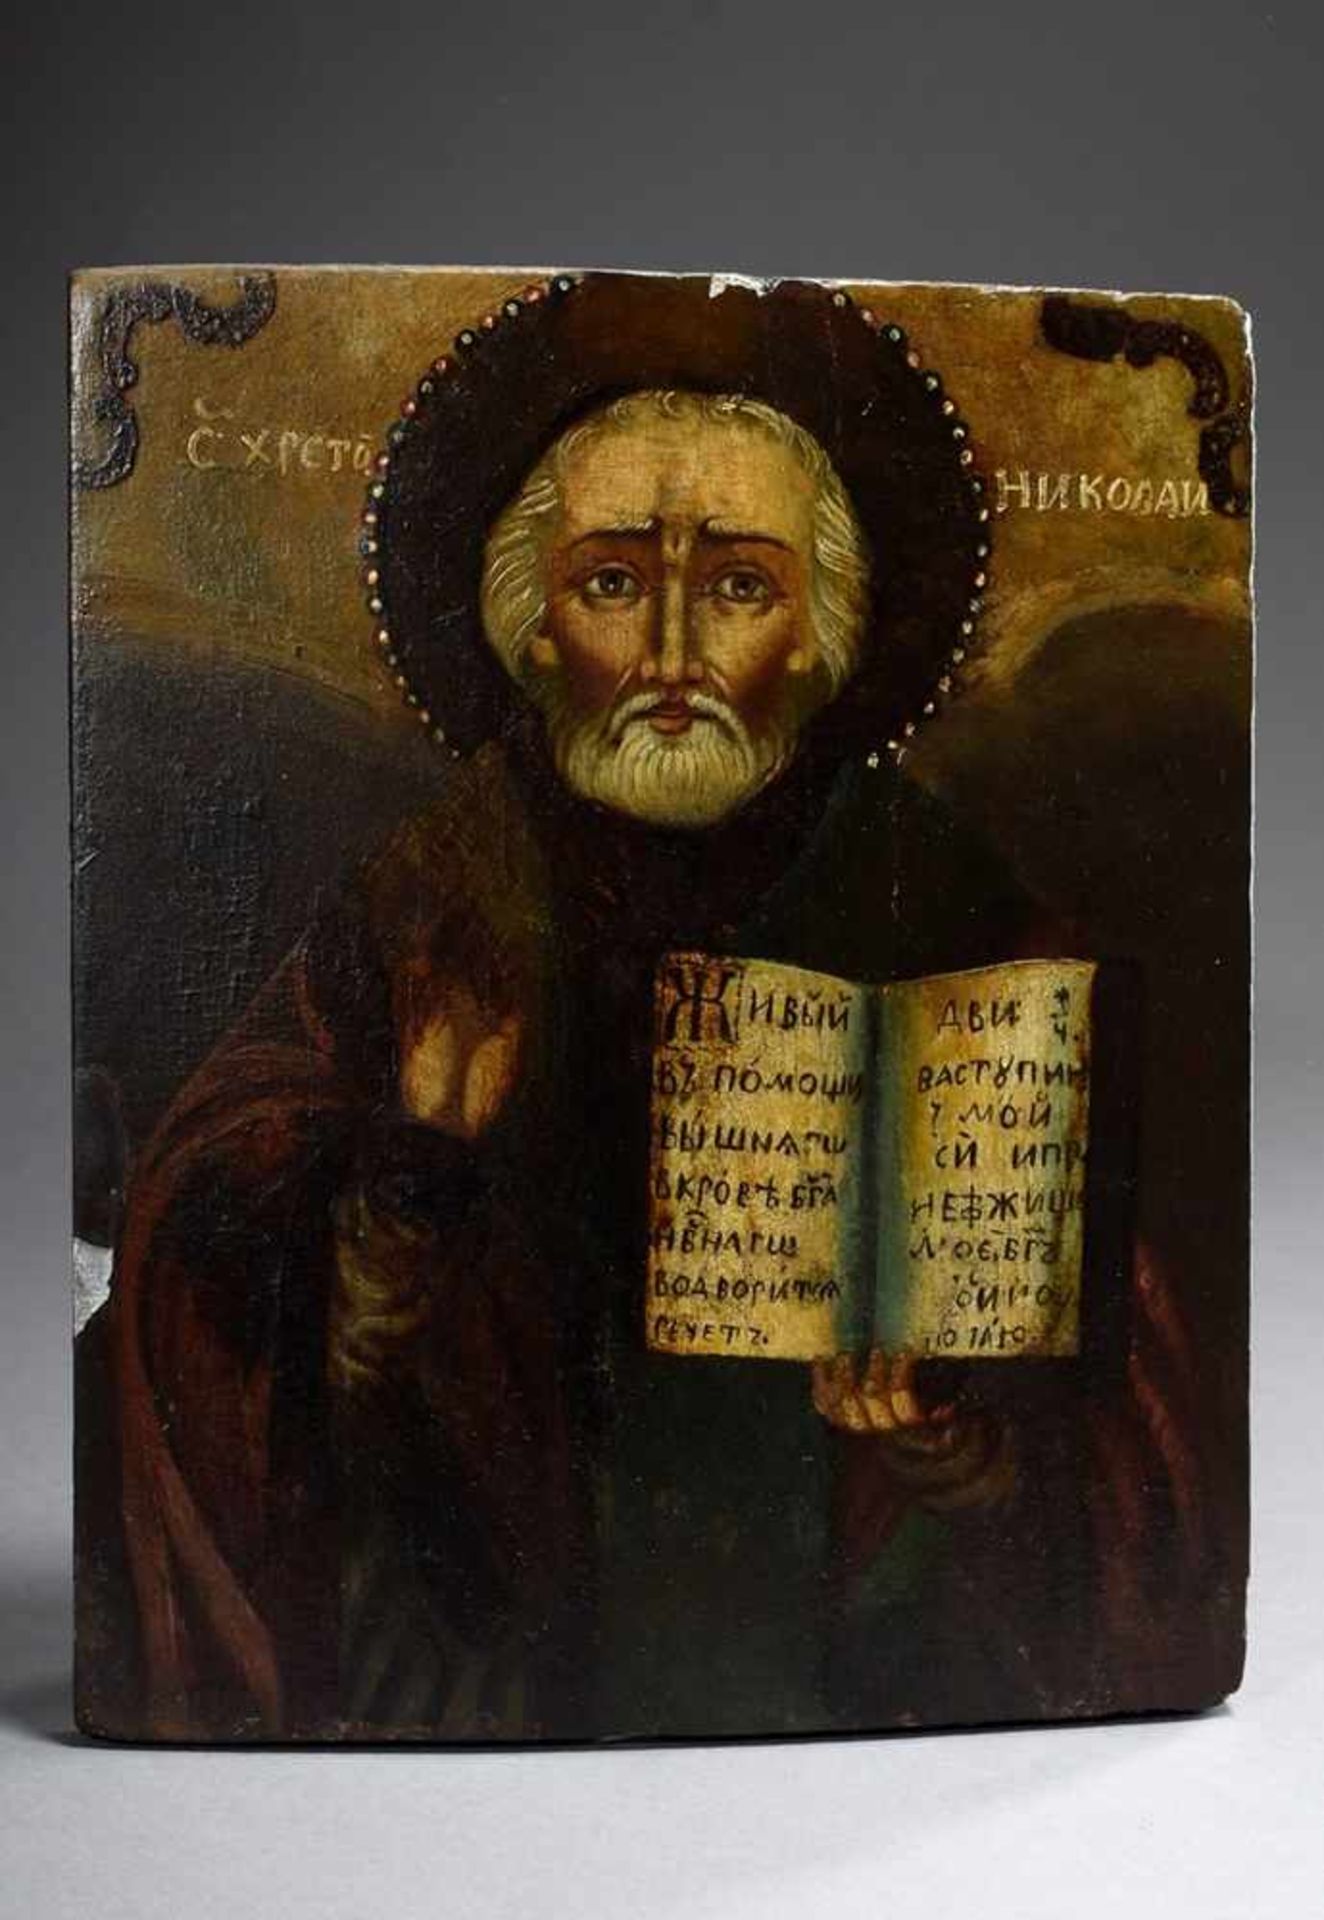 Russian icon "Saint Nikolaus", egg tempera/chalk ground over wood, around 1900, 30x25cm, some